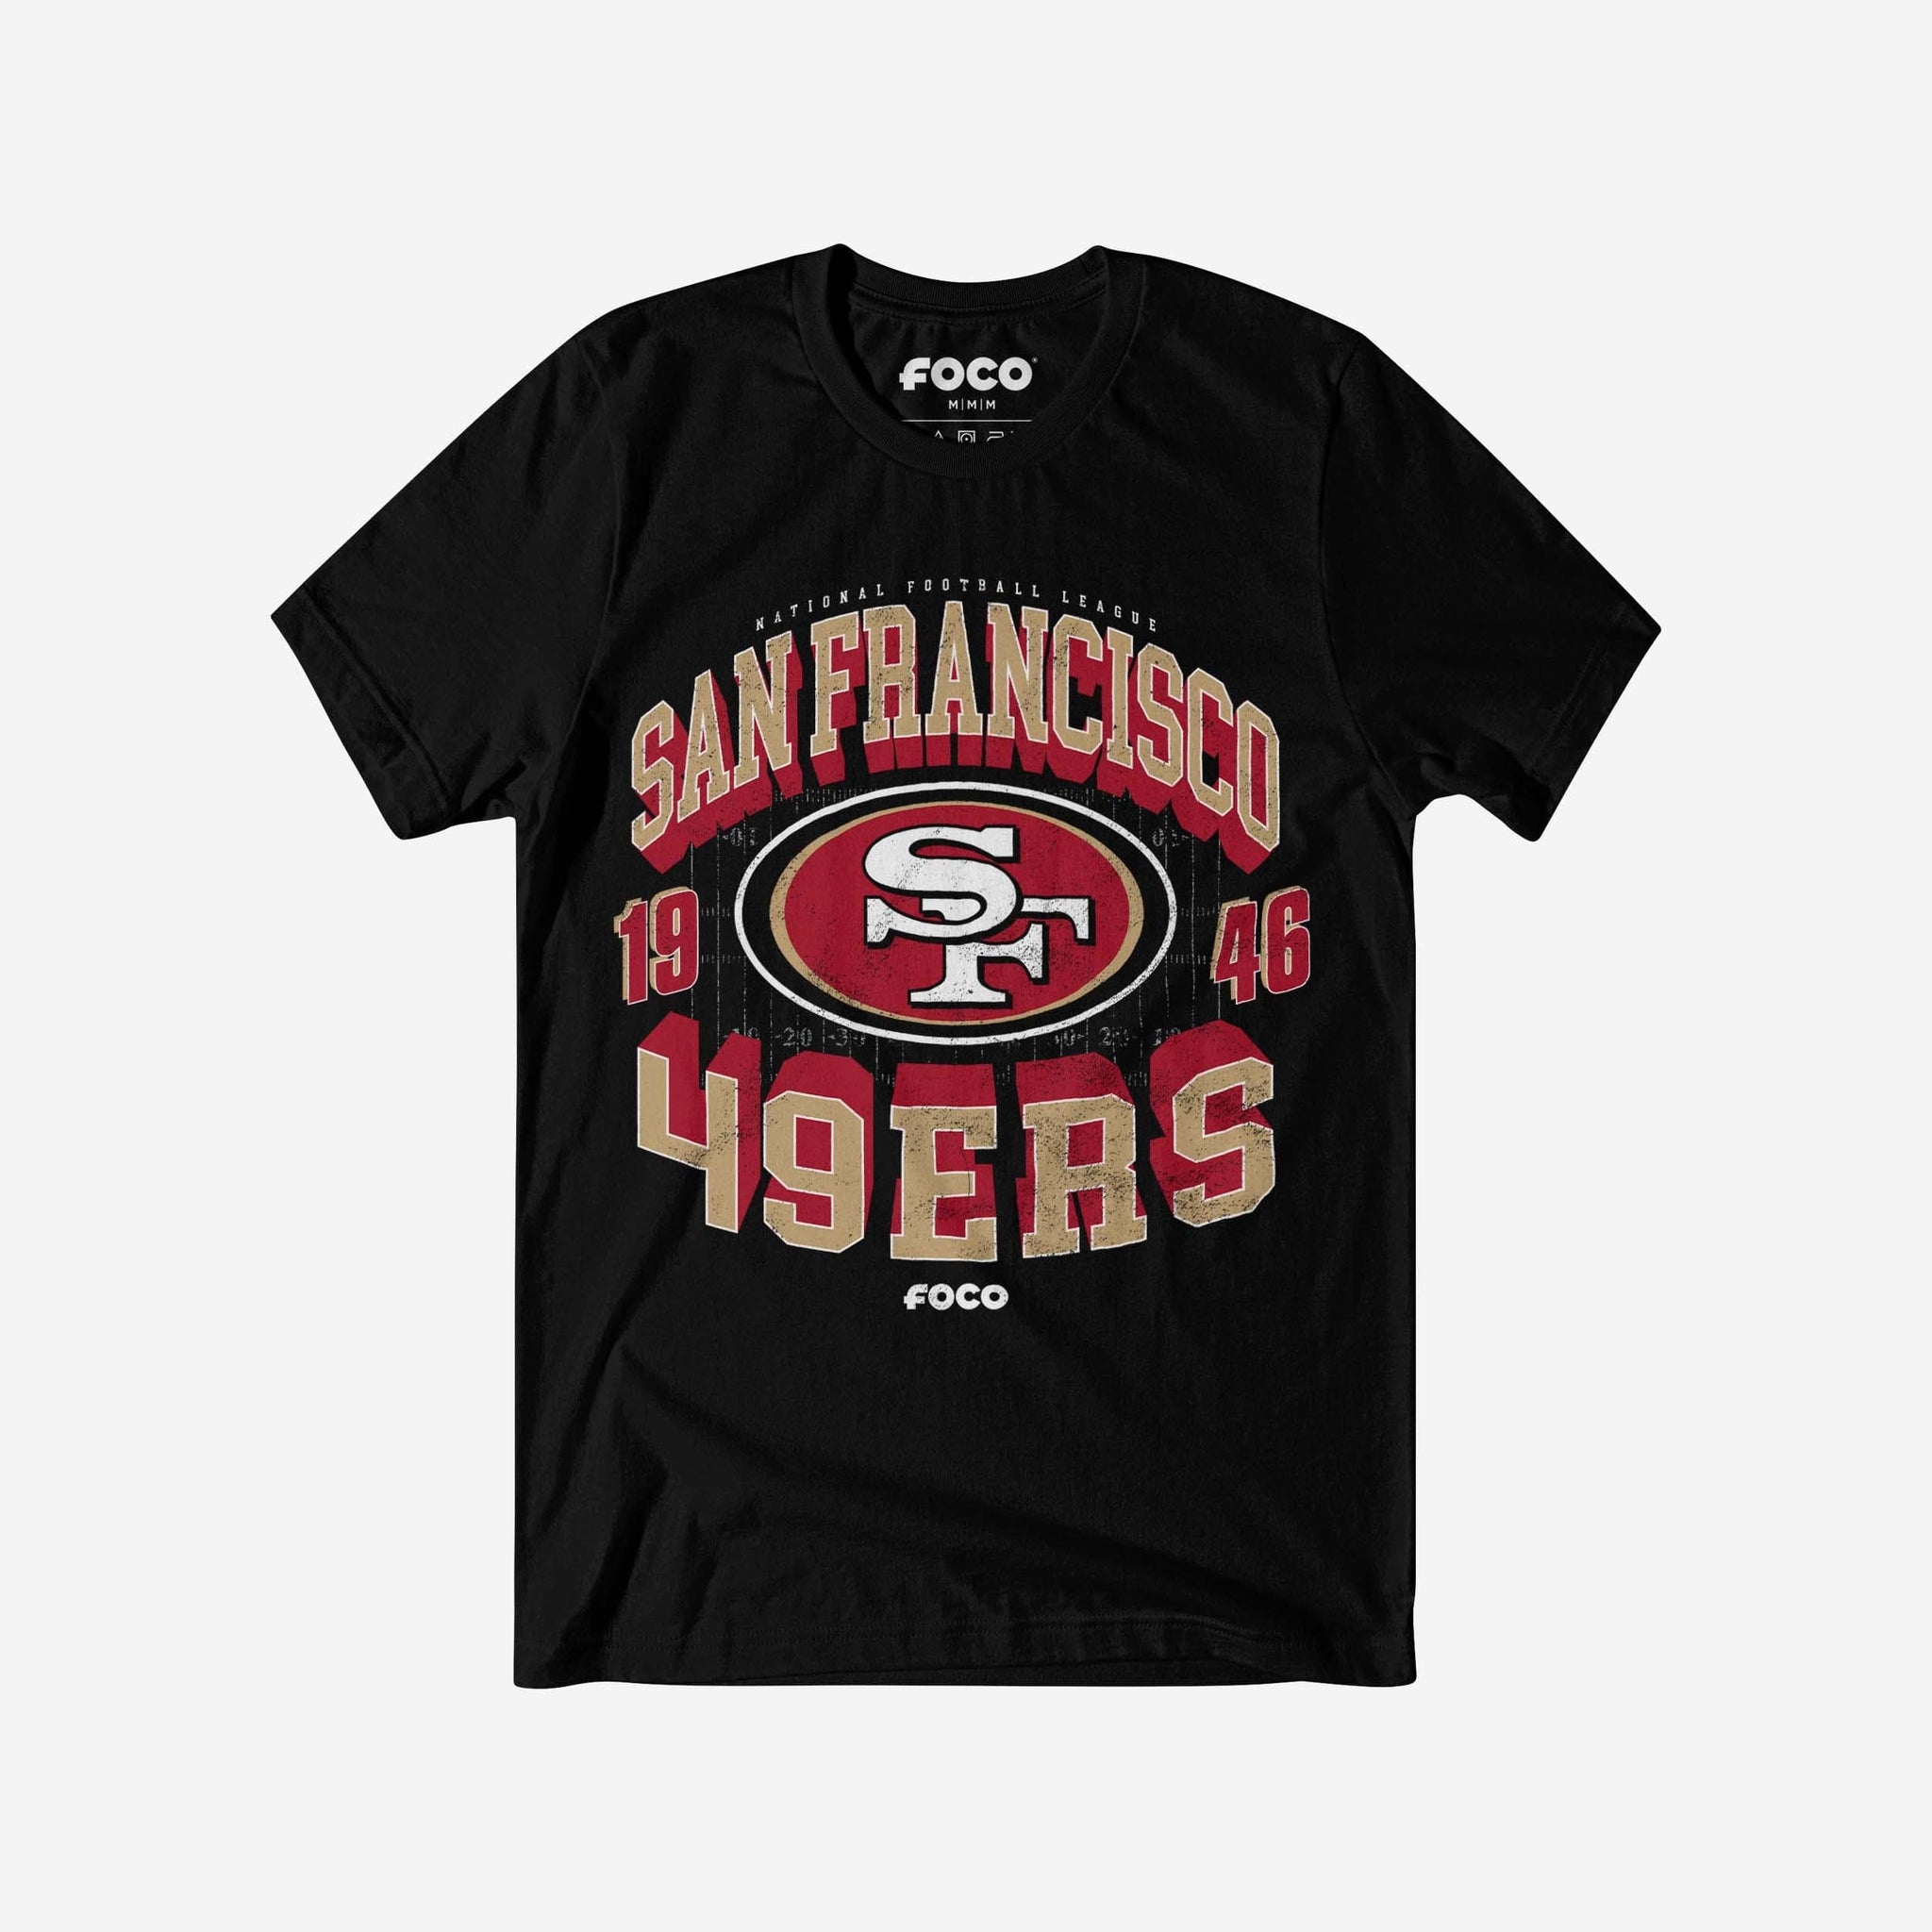 FOCO San Francisco 49ers Apparel & Clothing Items. Officially